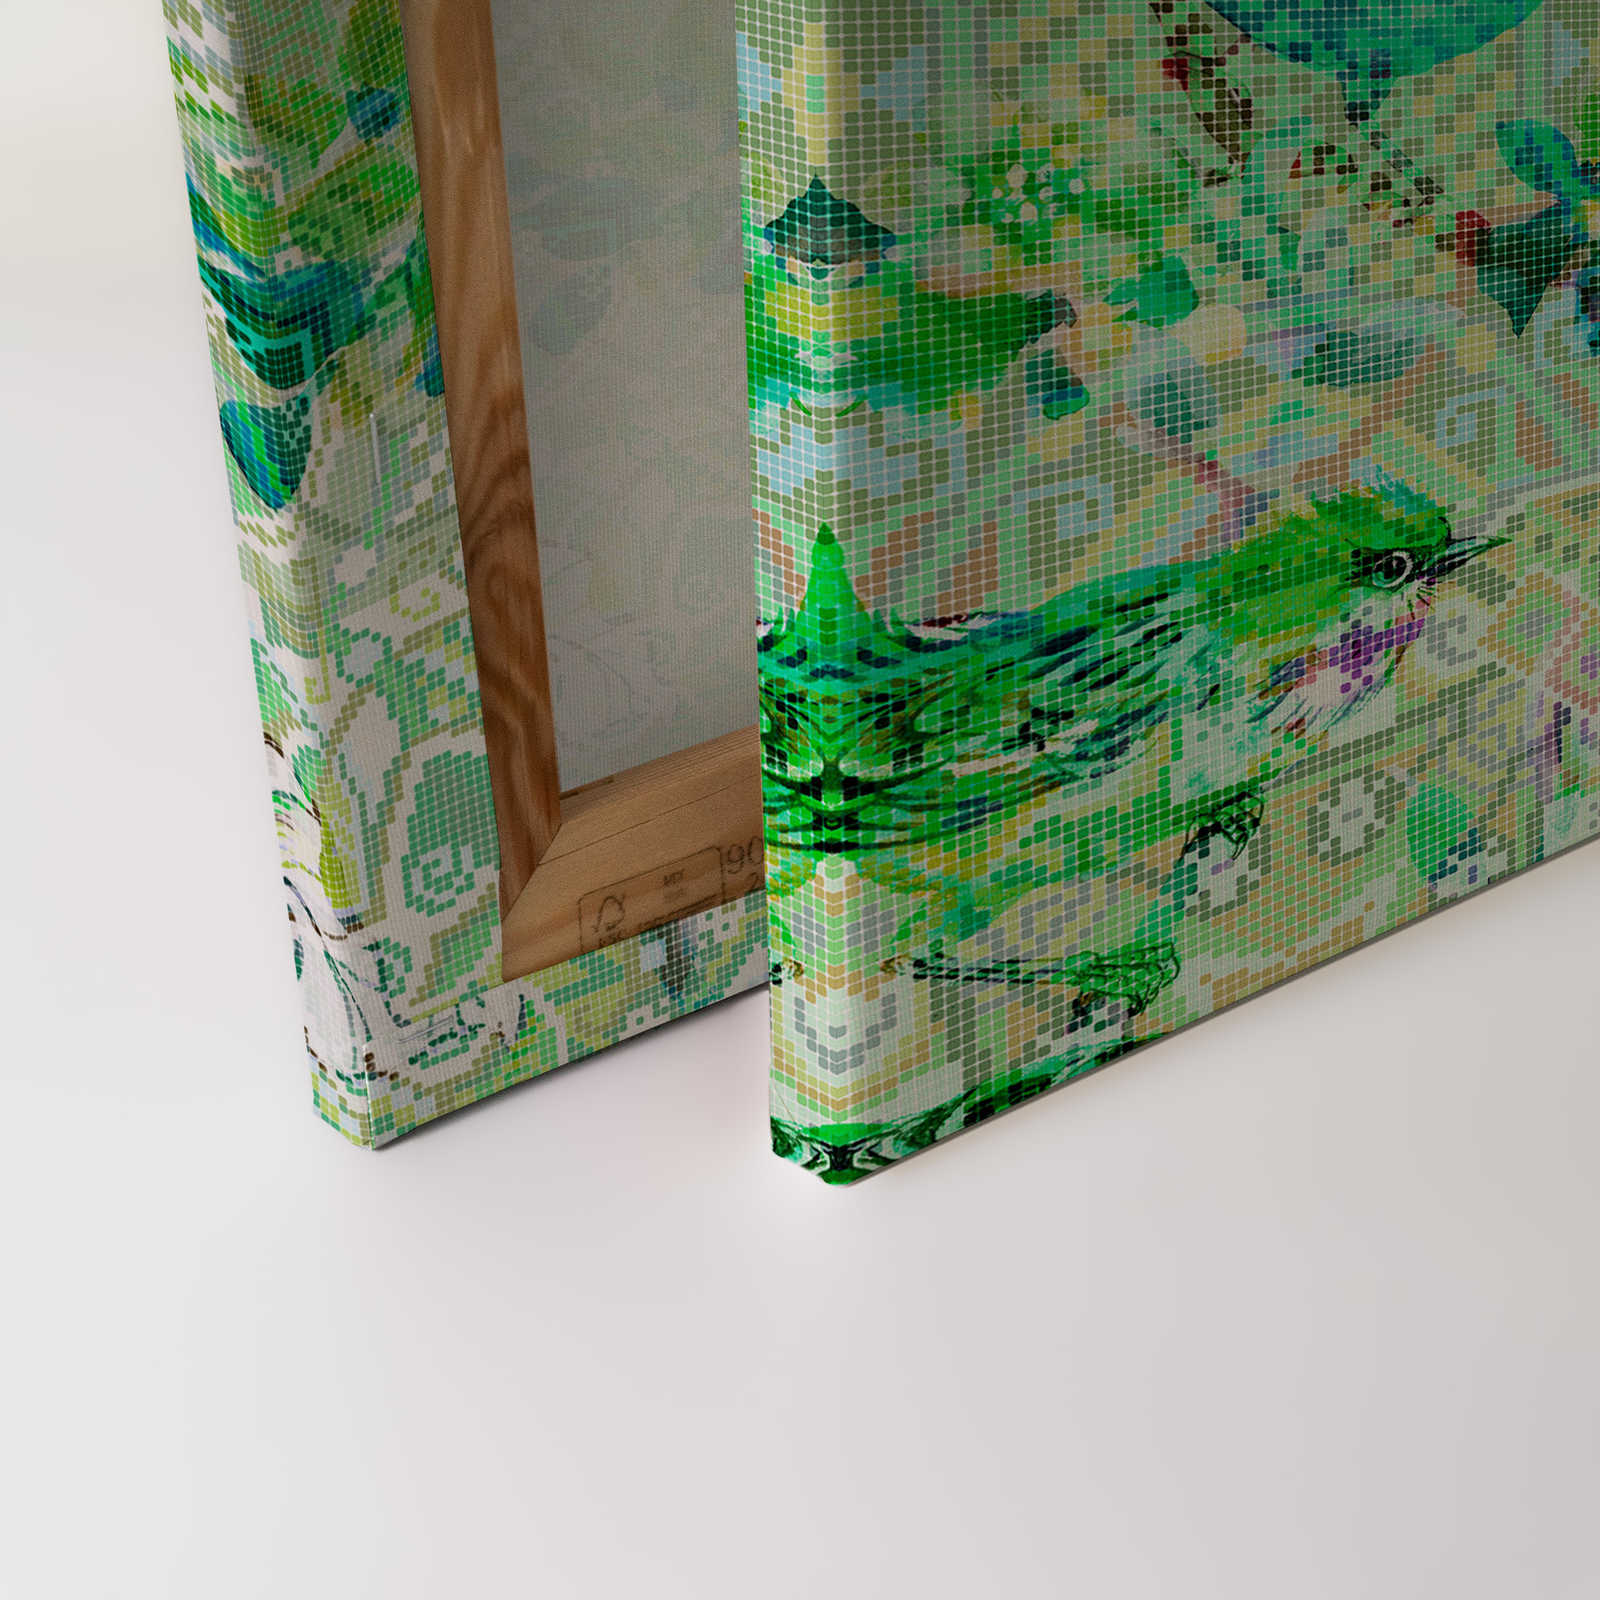             Vogel Leinwandbild Grün mit Mosaik Muster – 0,90 m x 0,60 m
        